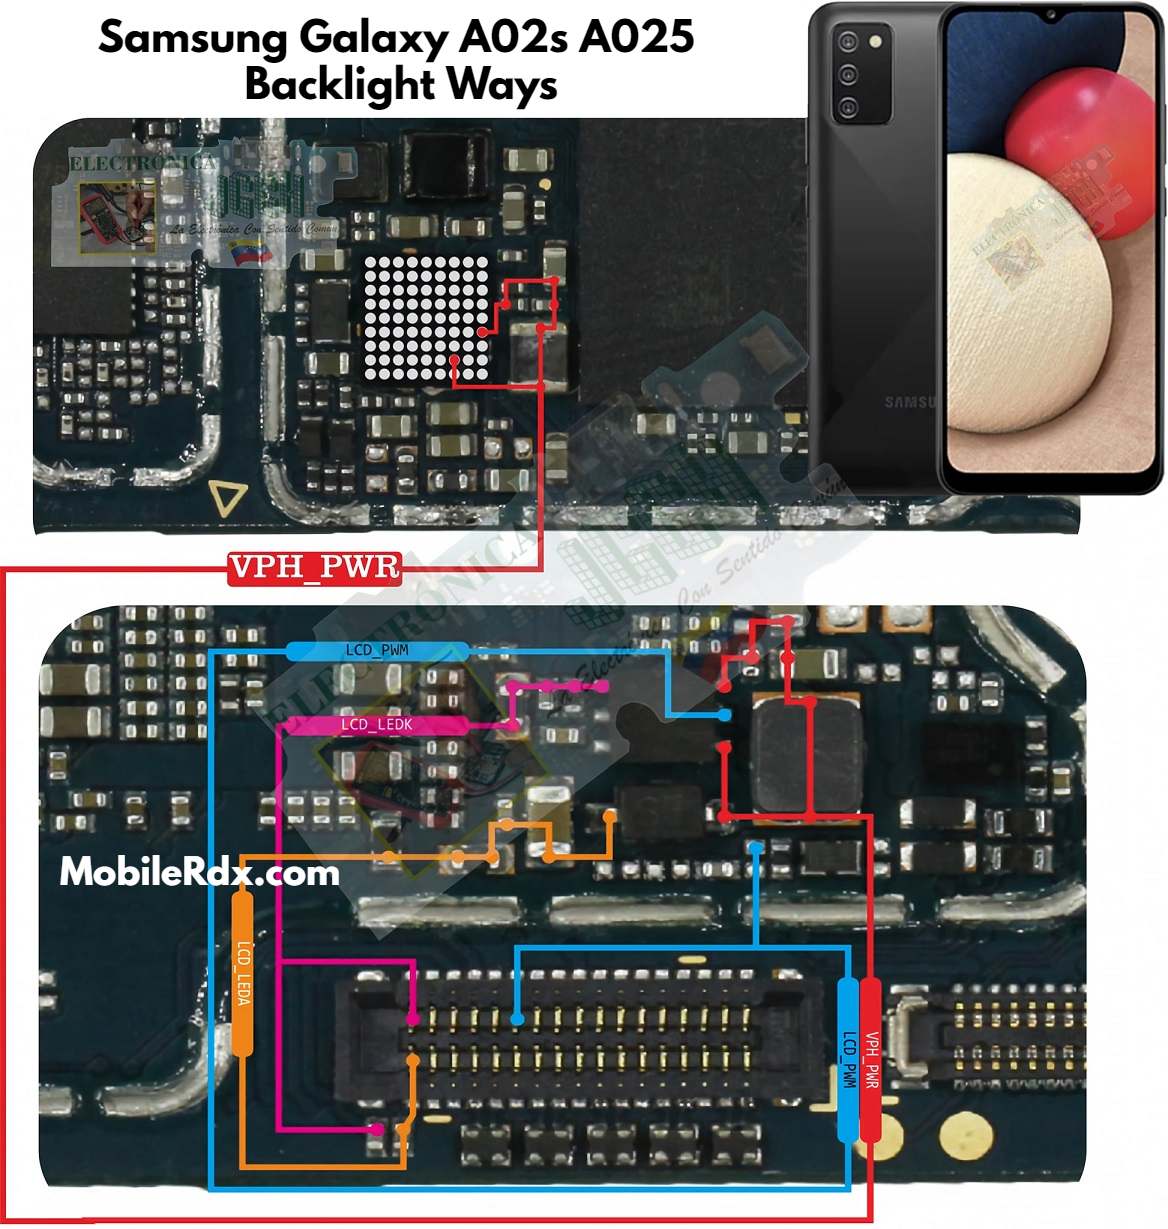 Samsung Galaxy A02s A025 Backlight Ways   Repair Display Light Problem